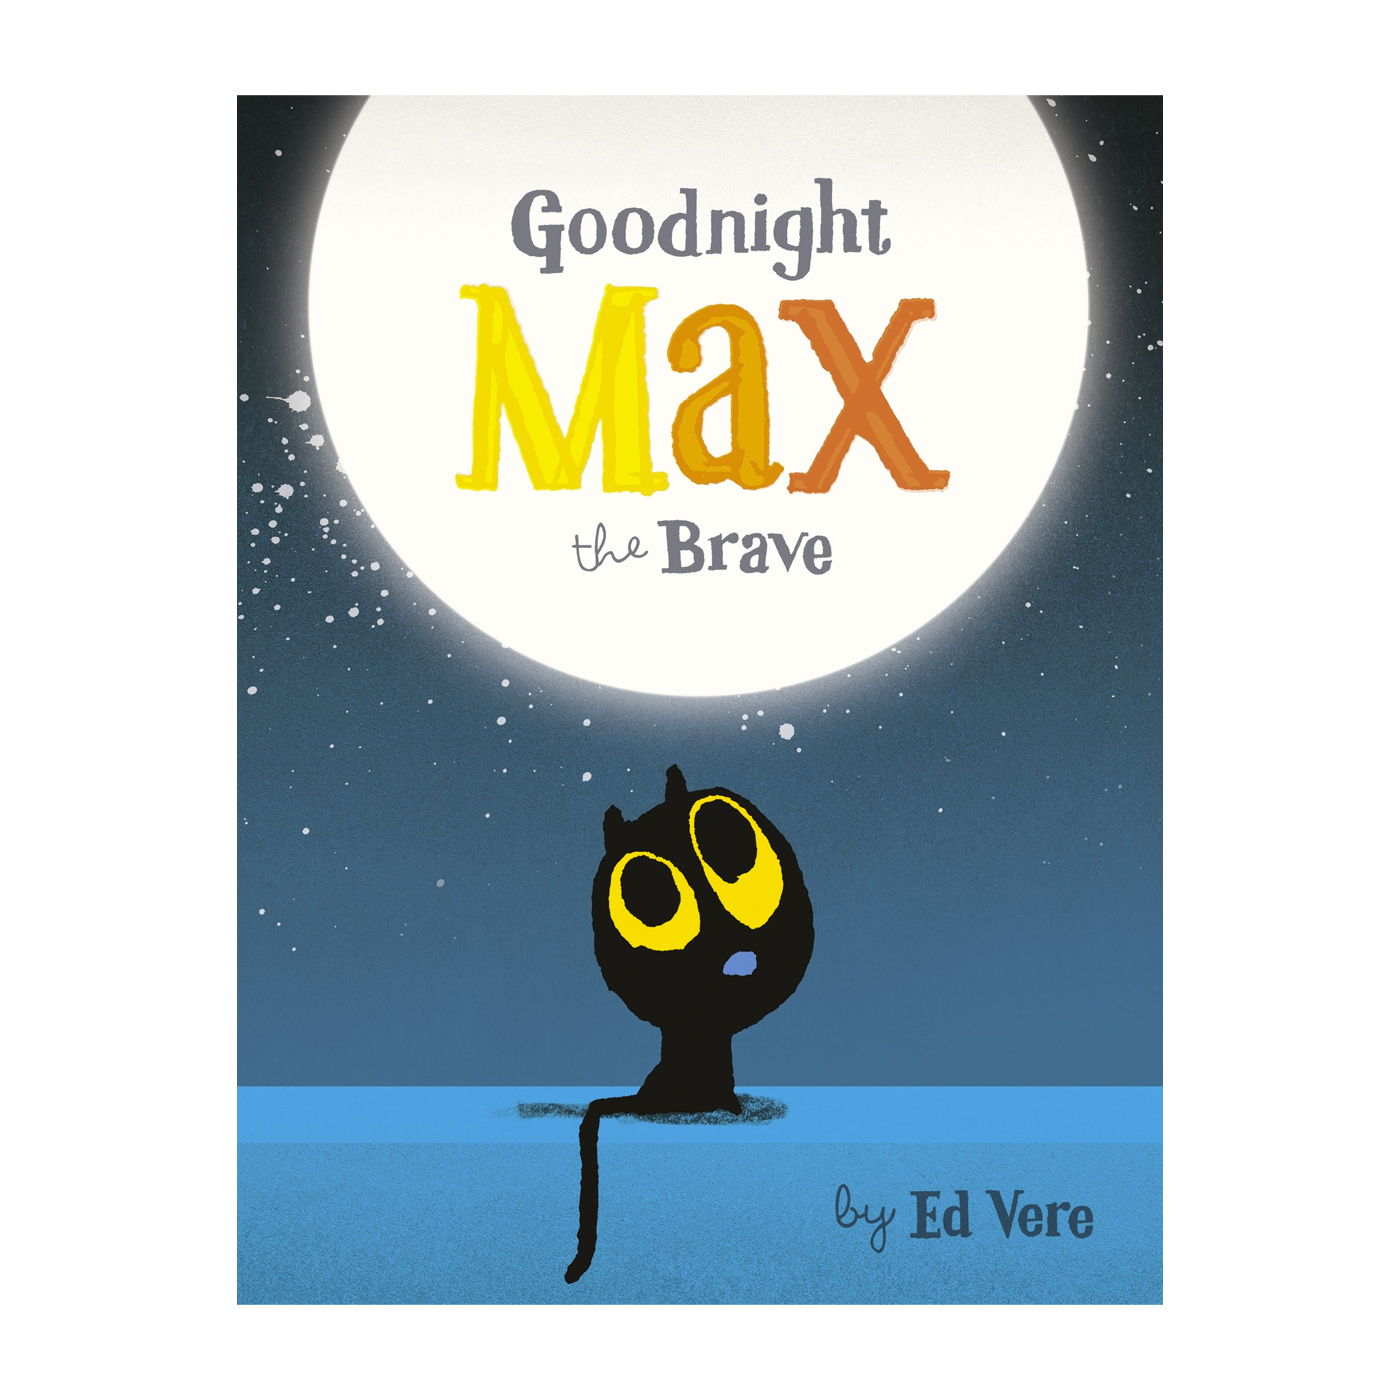  Goodnight, Max The Brave